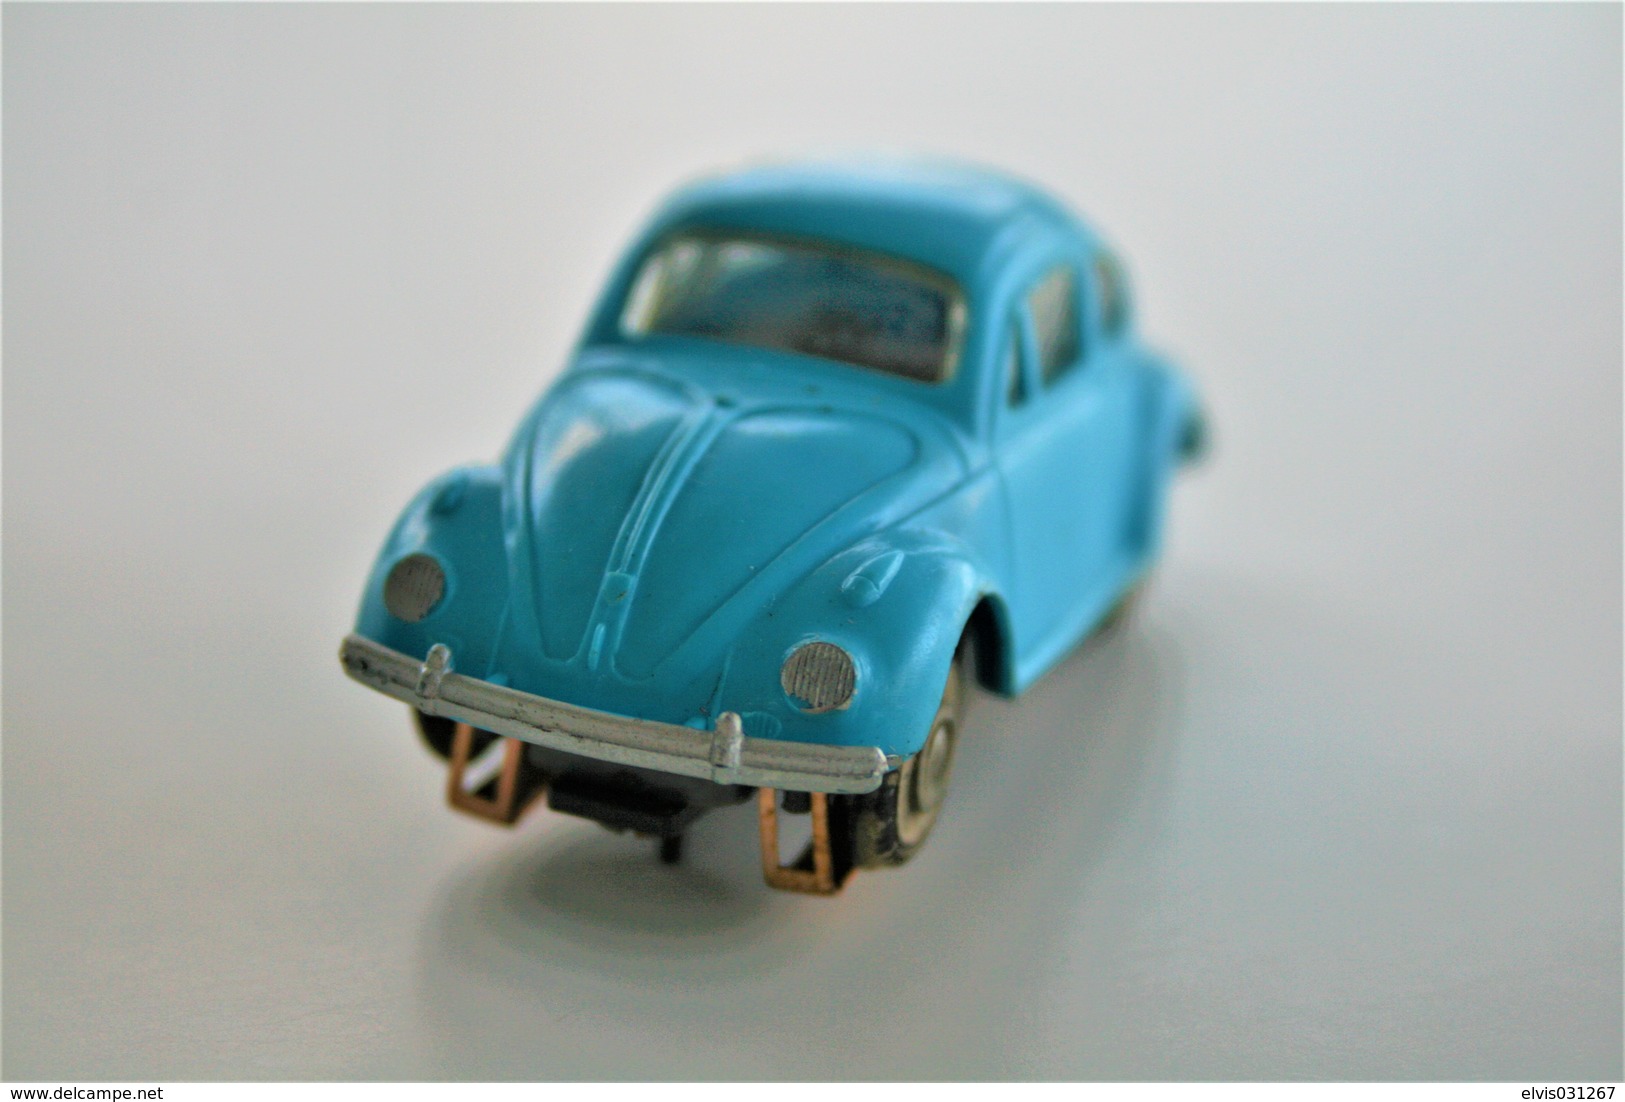 FALLER AMS 4803 Type 1 VW Beetle - VW Bug - Blue - 1950-60's with original box